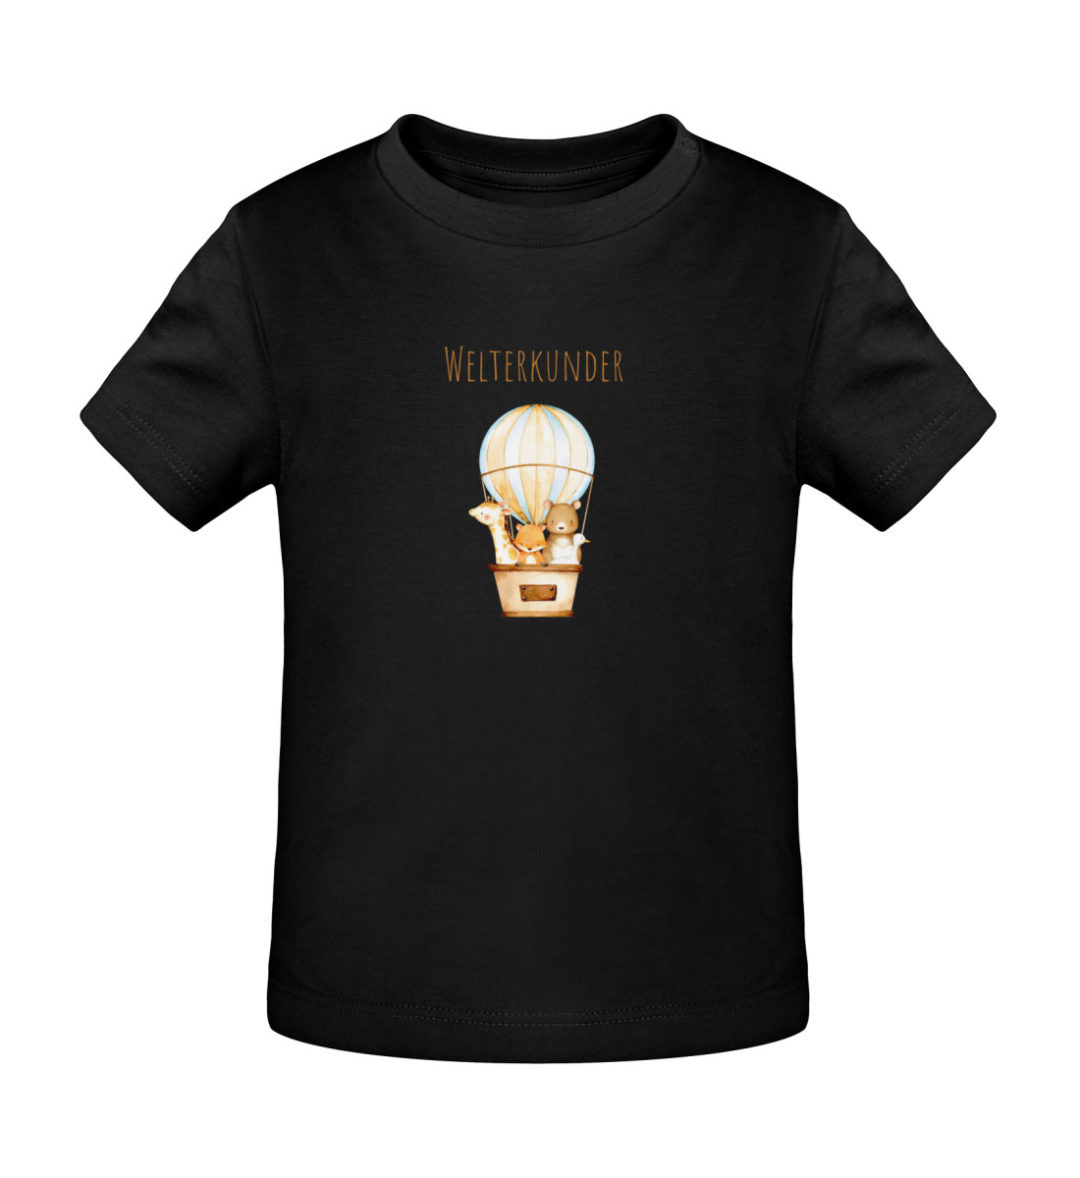 Welterkunder - Baby Creator T-Shirt ST/ST-16